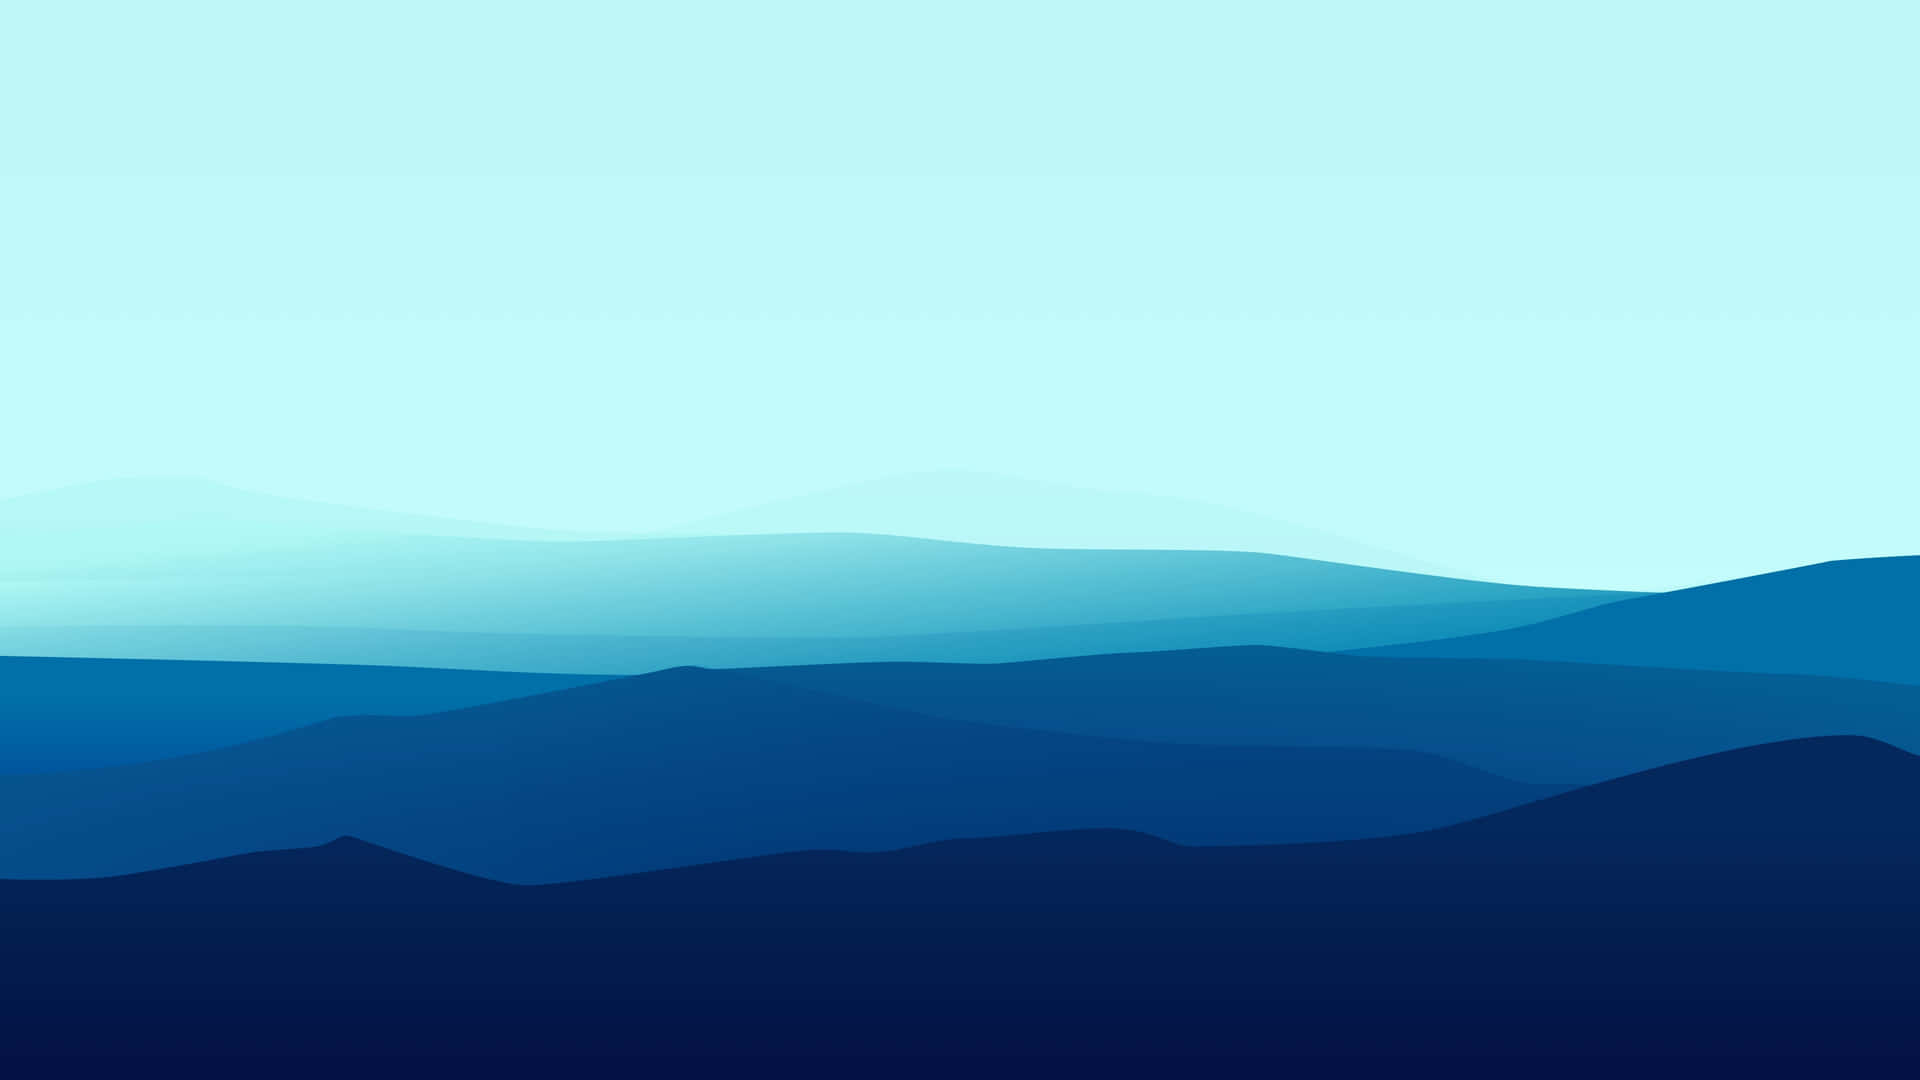 Unpaisaje De Montañas Azules Y Blancas Con Un Cielo Azul Fondo de pantalla